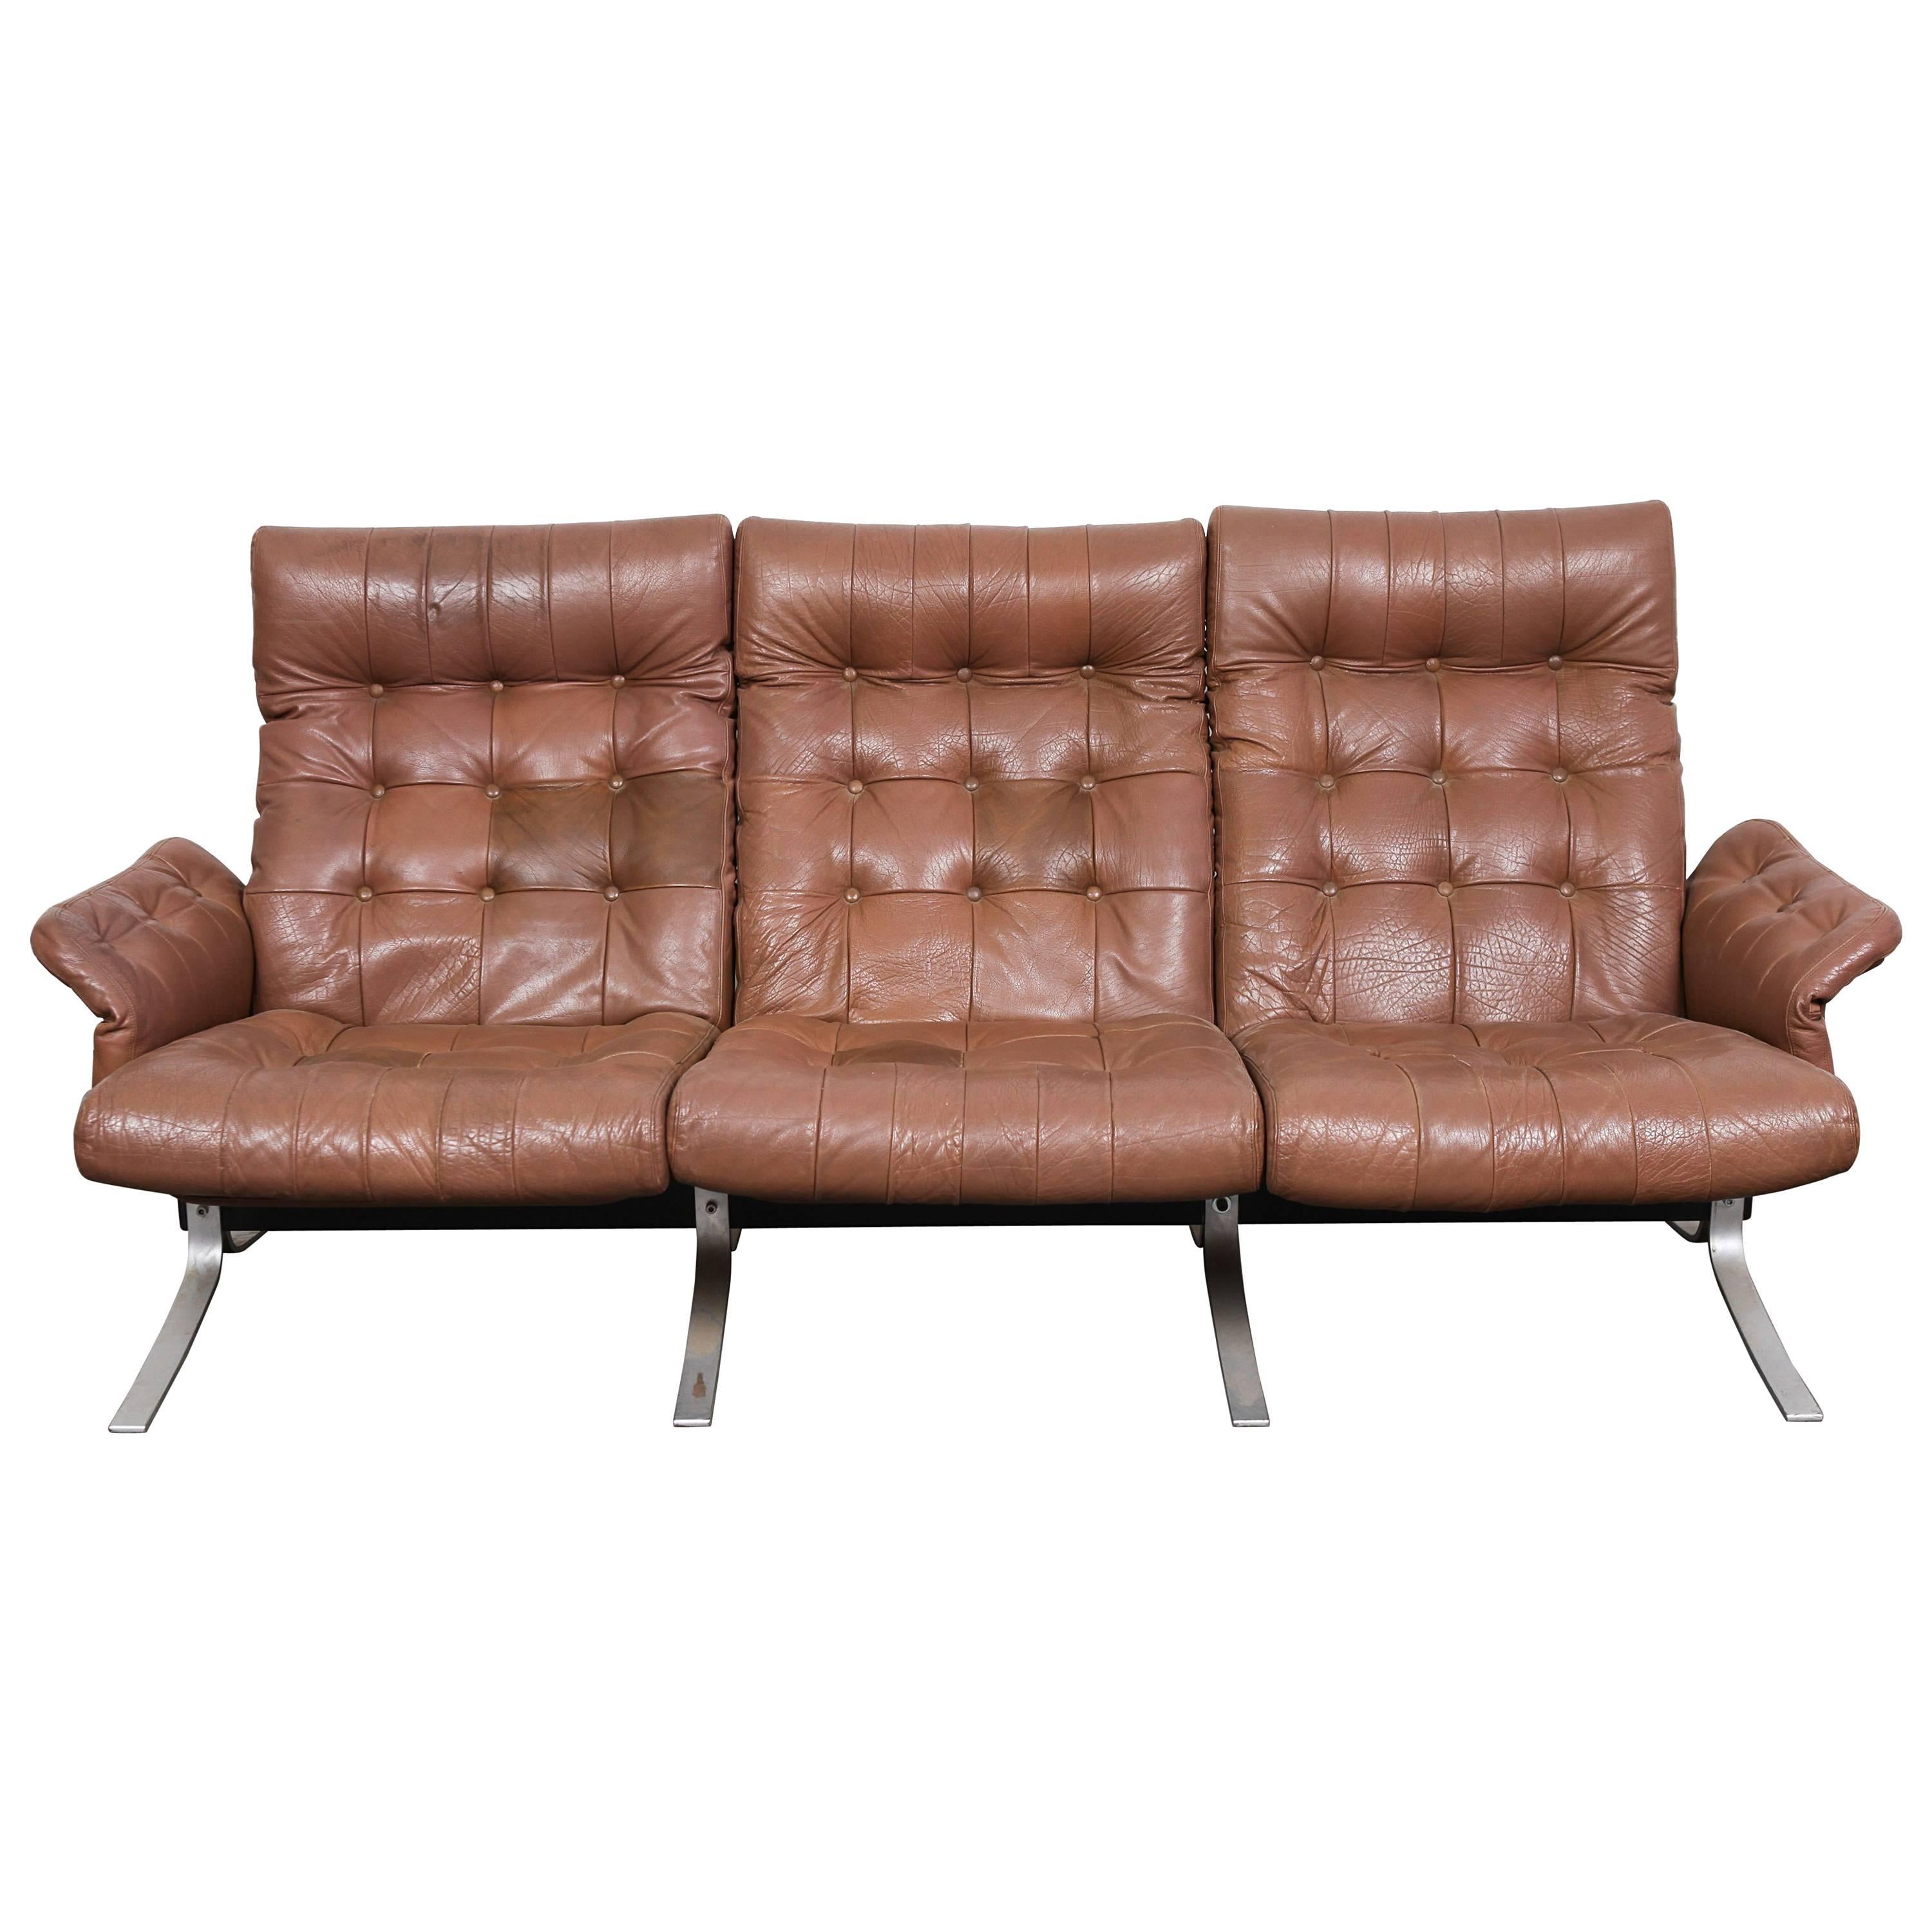 Danish Mid-Century Modern three-seat tufted leather and metal framed sofa by Ebbe Gehl & Søren Nissen. Model 